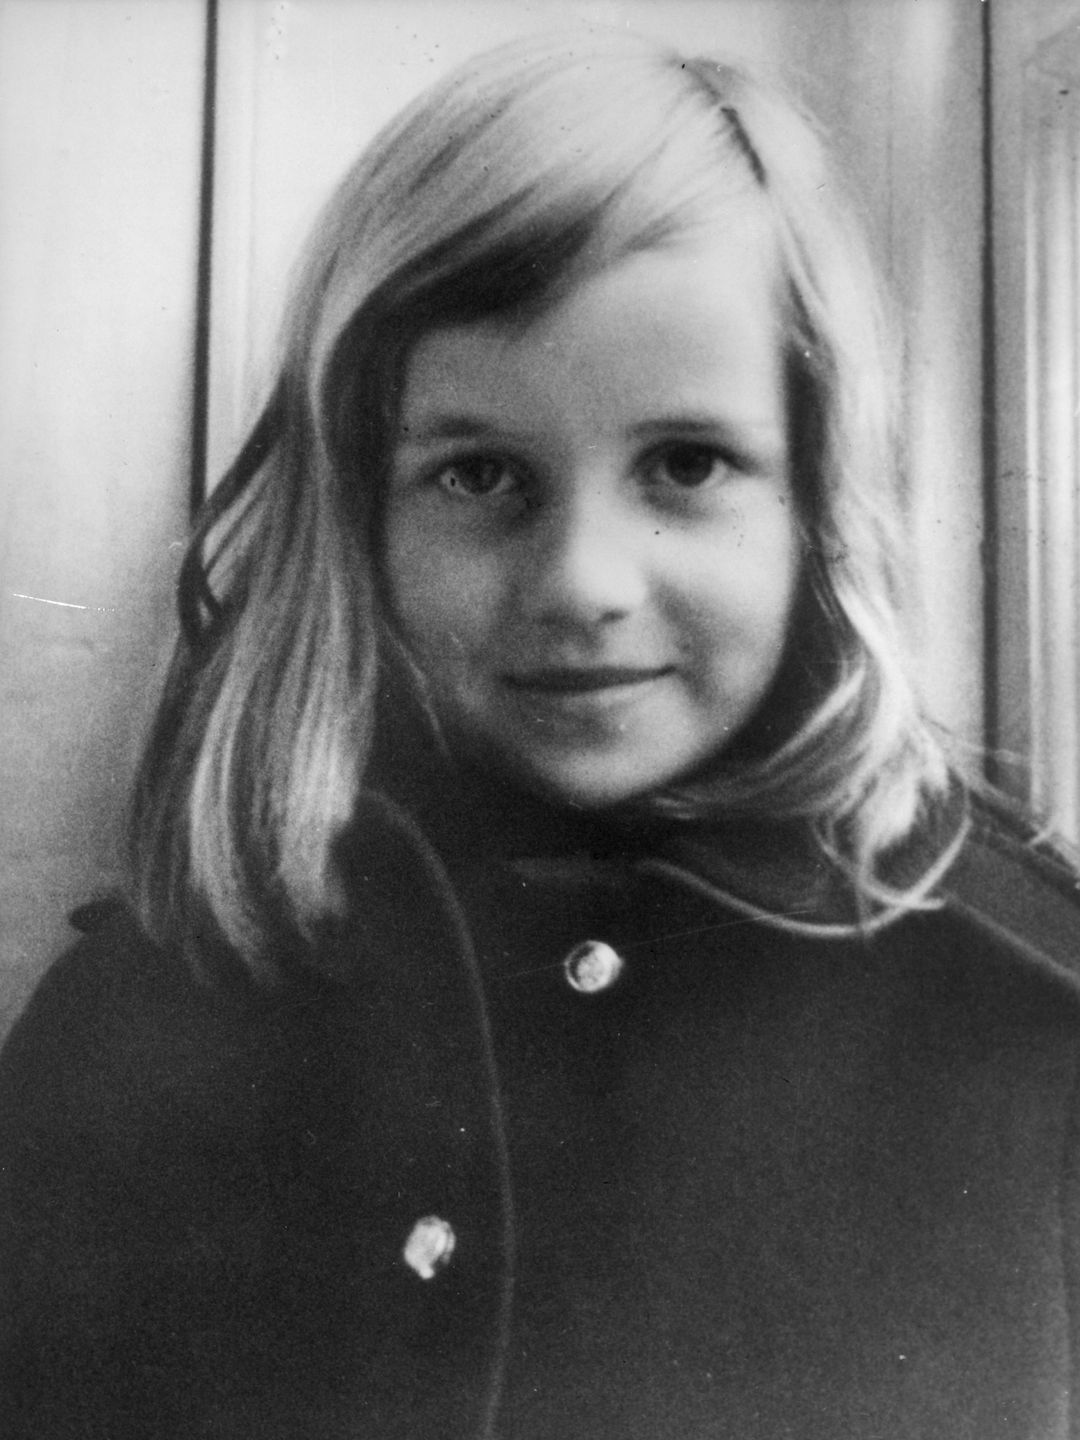 A young Princess Diana in a black coat